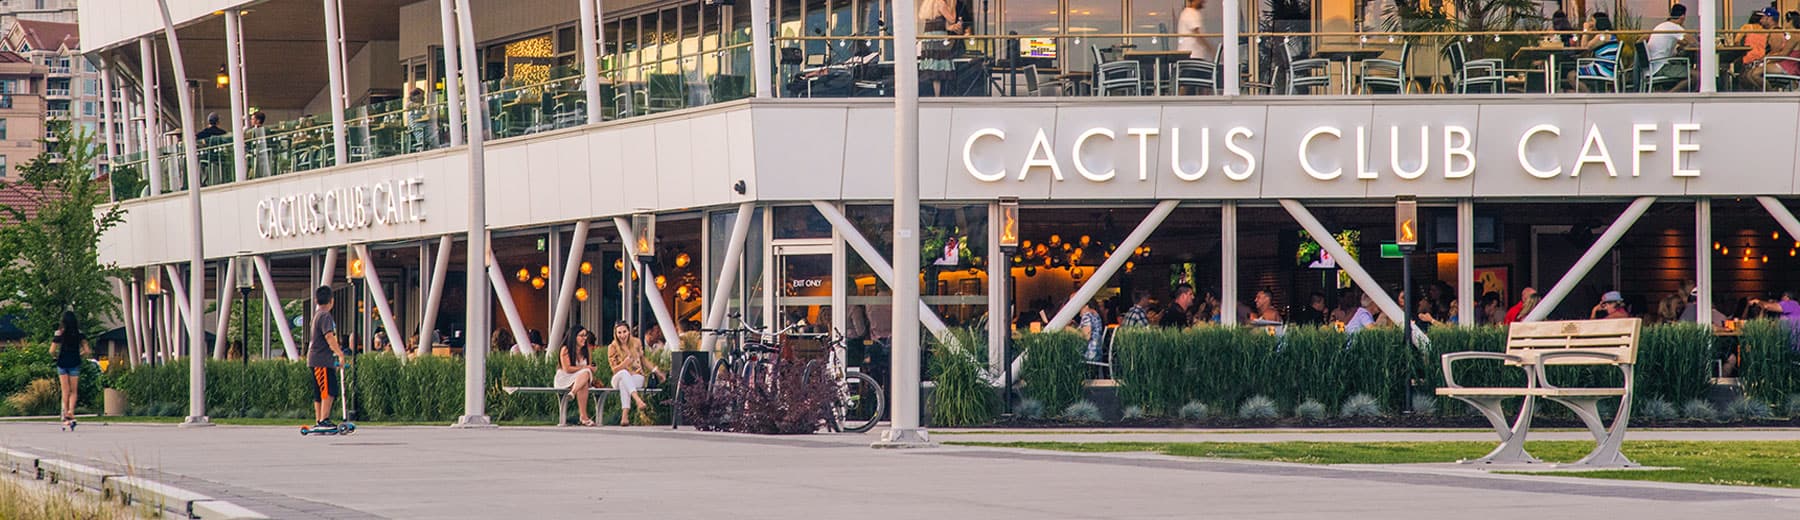 Kelowna Yacht Club | Cactus Club Cafe